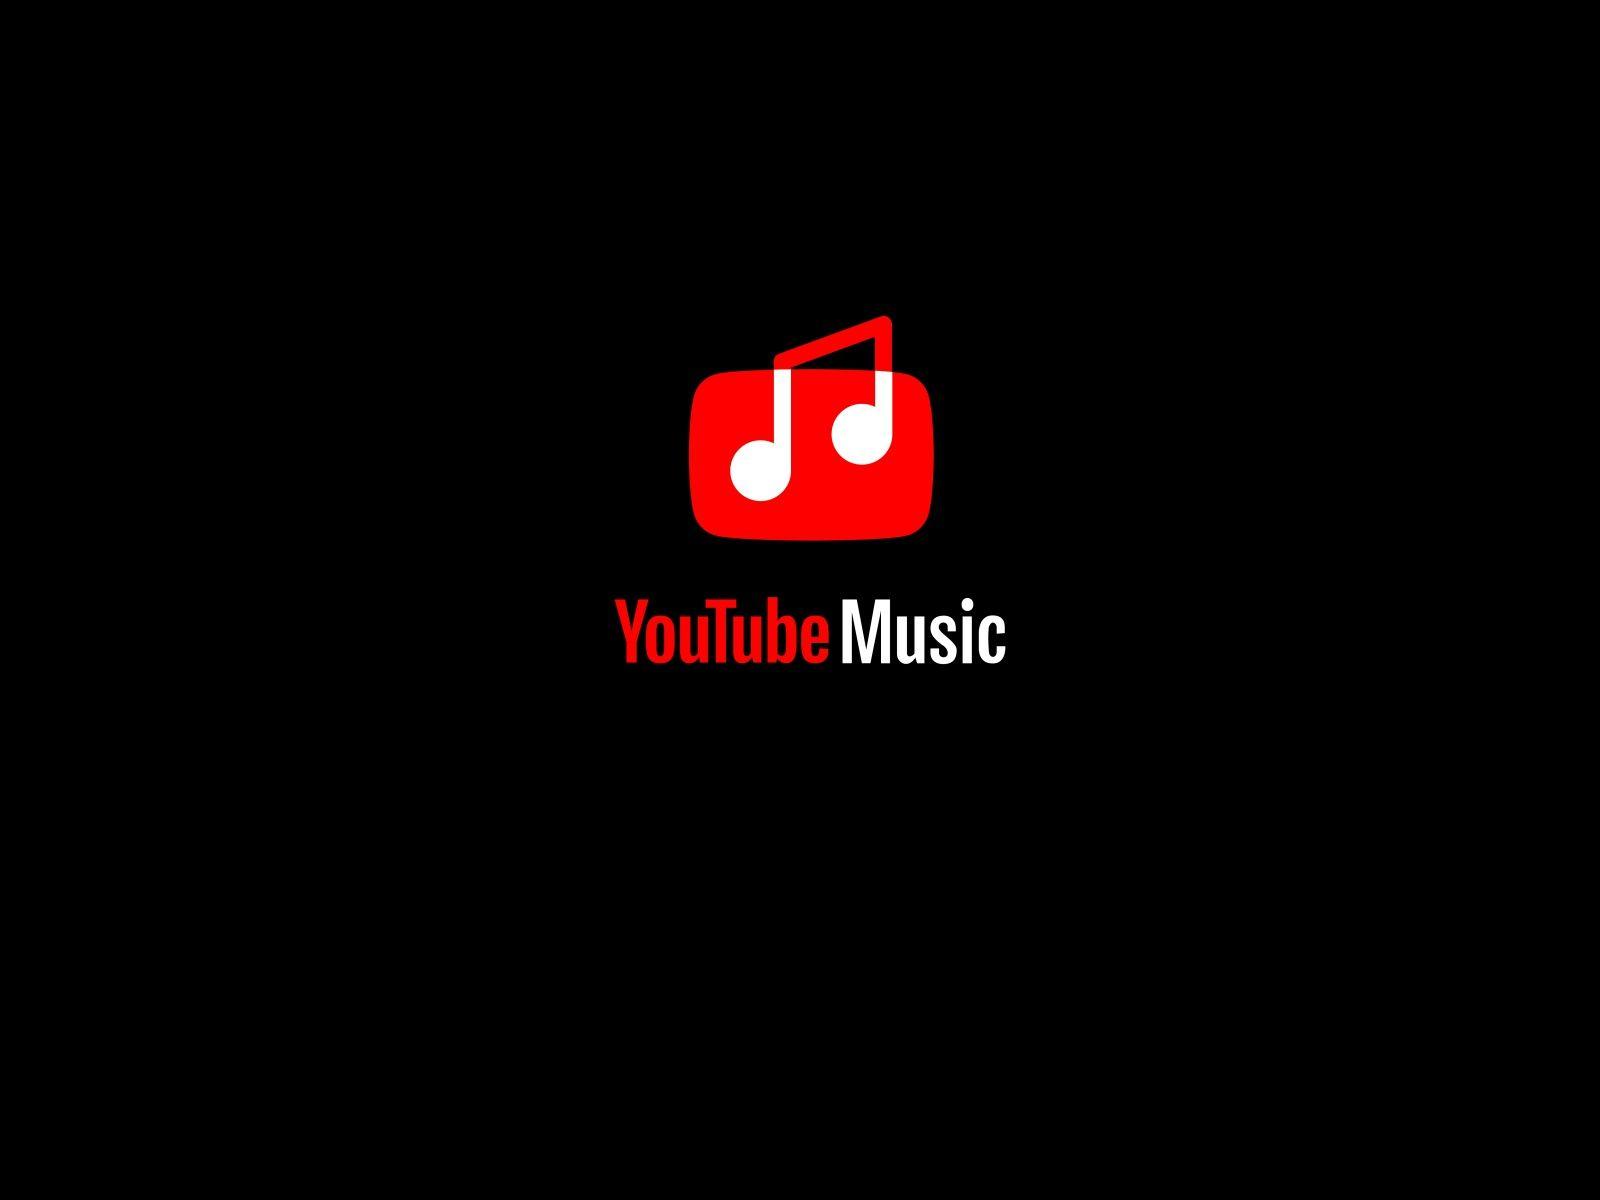 YouTube Music Logo - YouTube Music by Furkan Arıncı on Dribbble